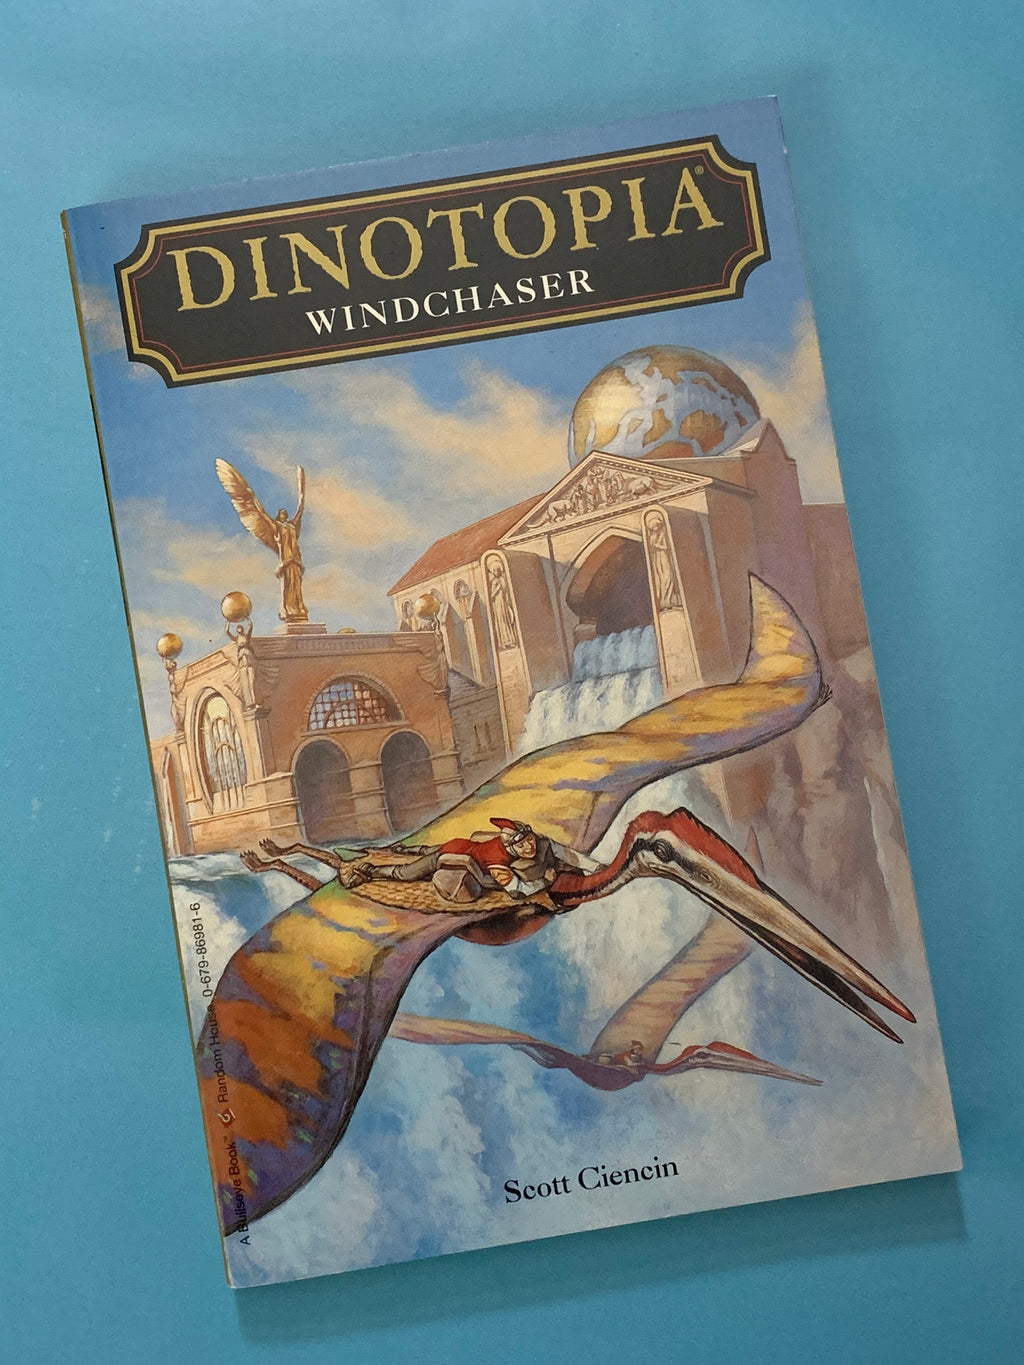 Dinotopia: Windchaser- By Scott Ciencin